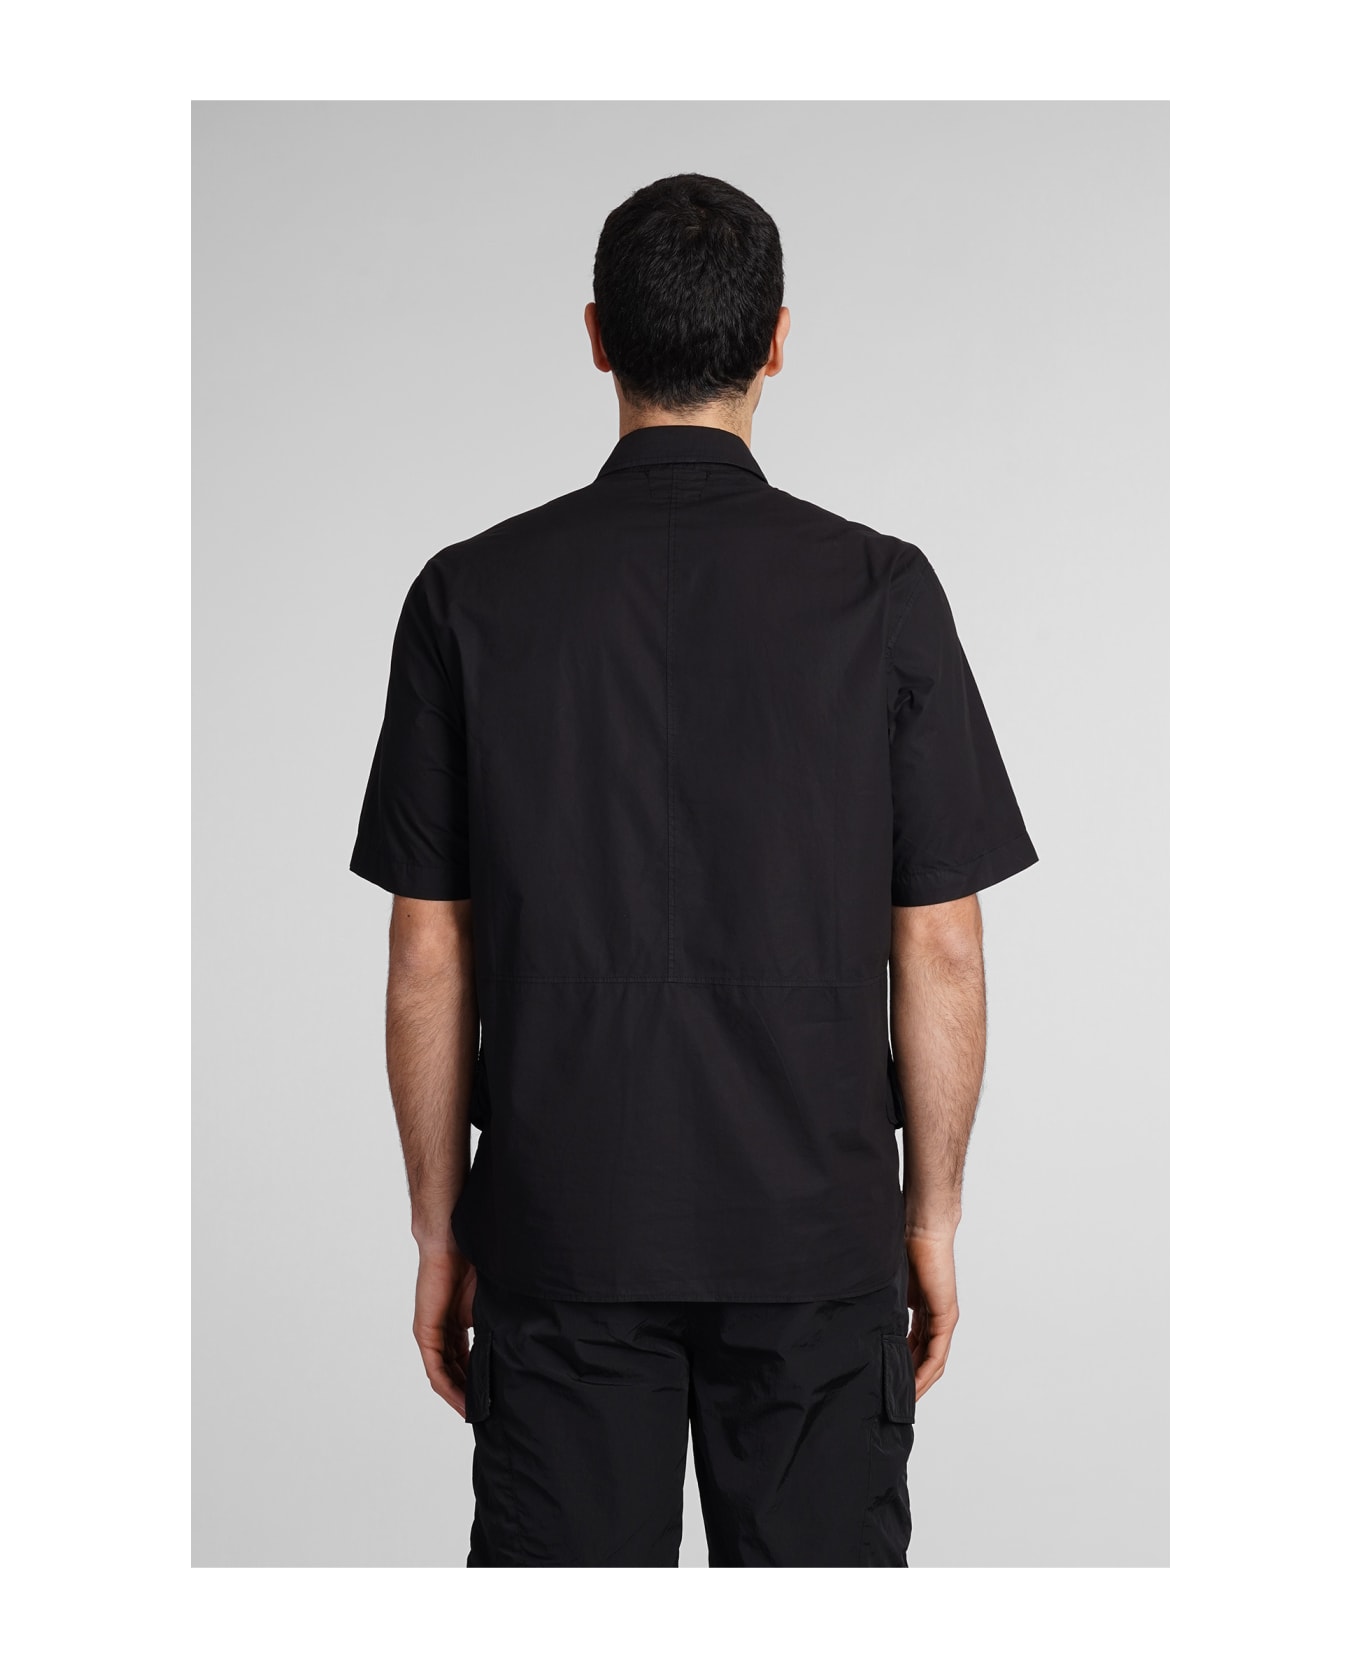 C.P. Company Black Cotton Shirt - Black